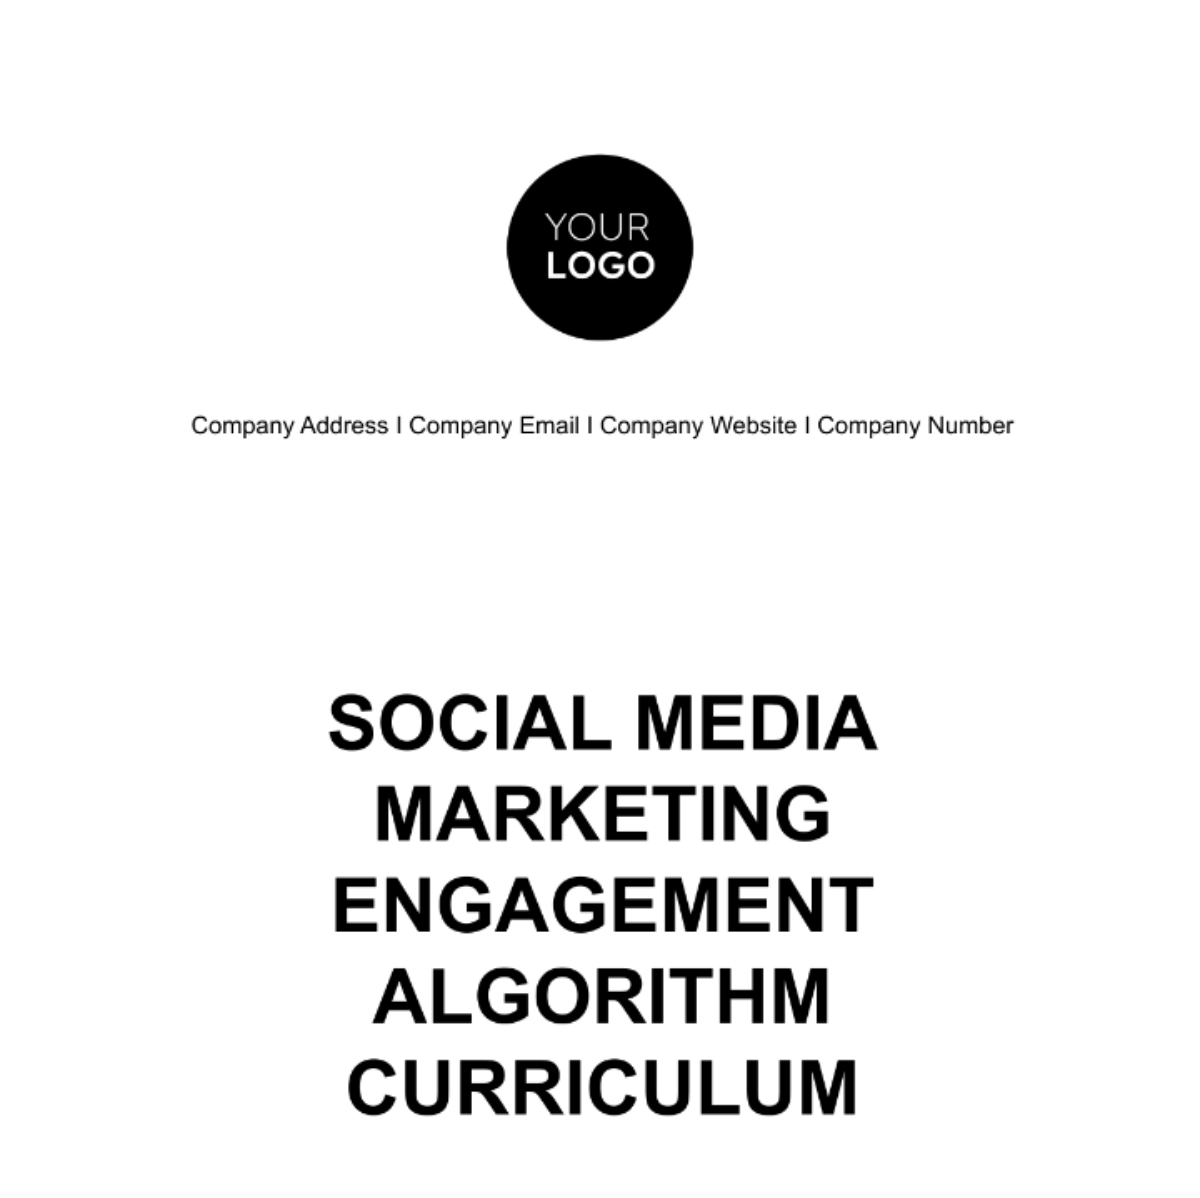 Social Media Marketing Engagement Algorithm Curriculum Template